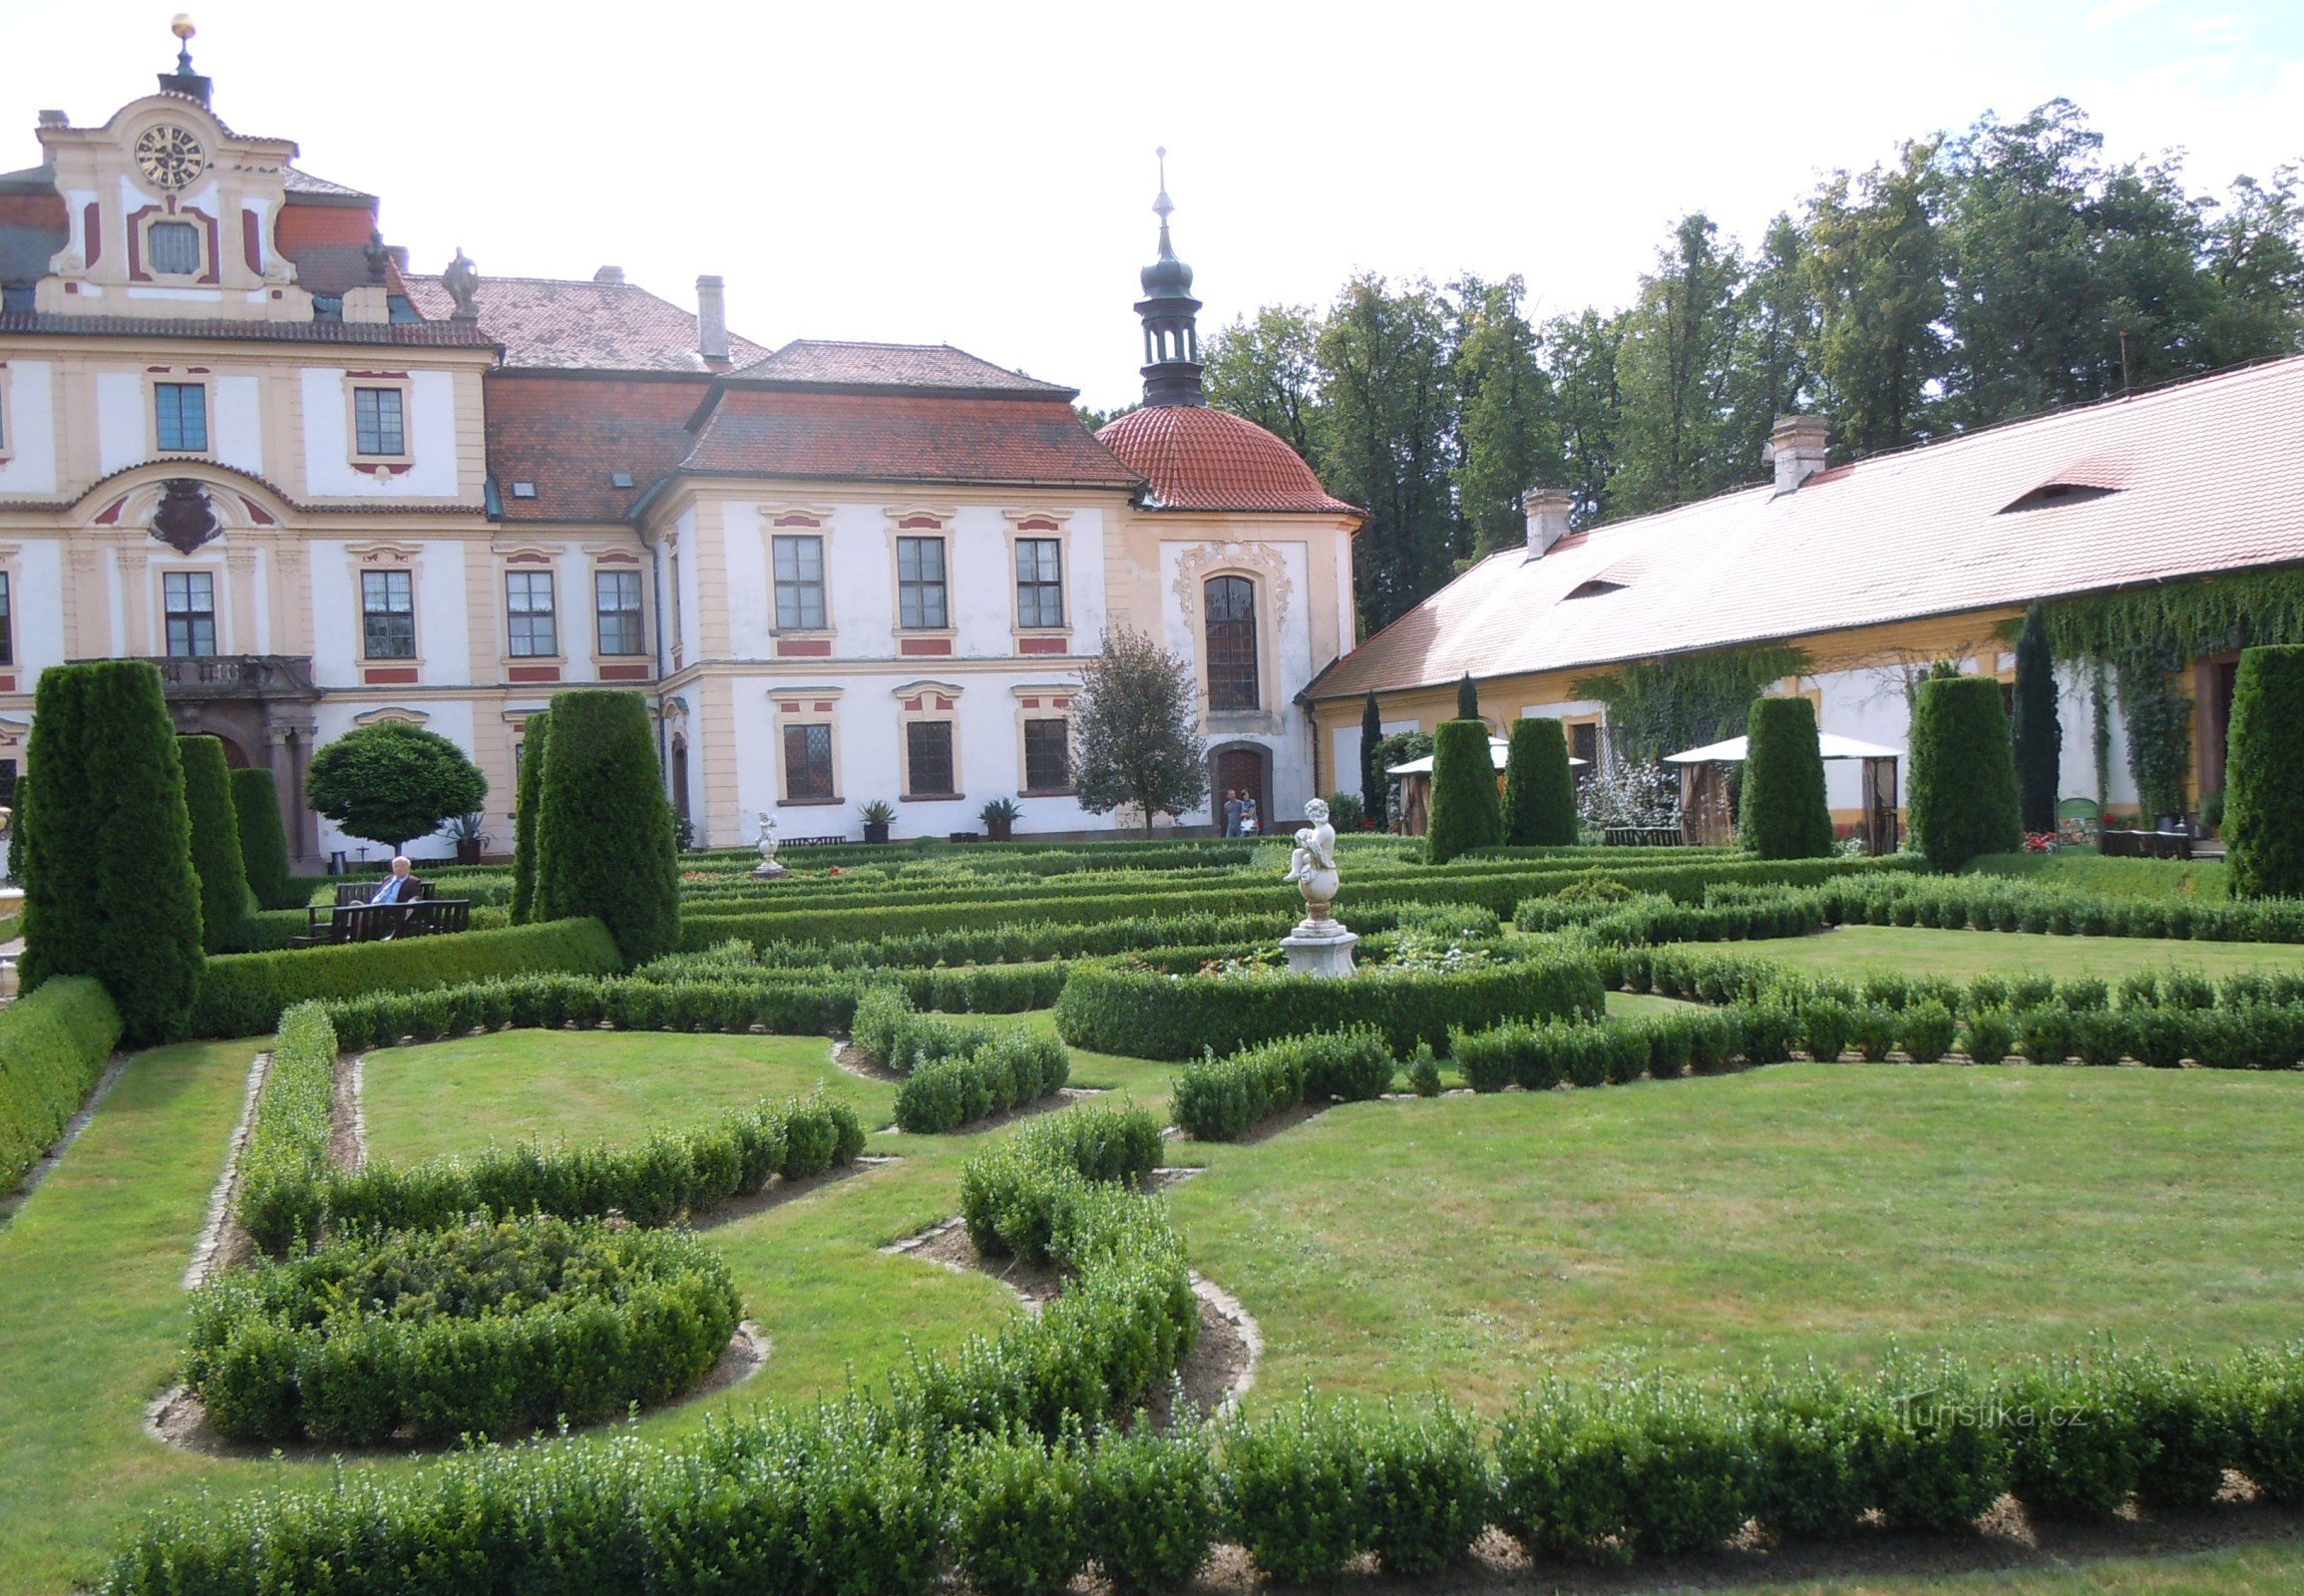 Jemniště castle - part of the front garden